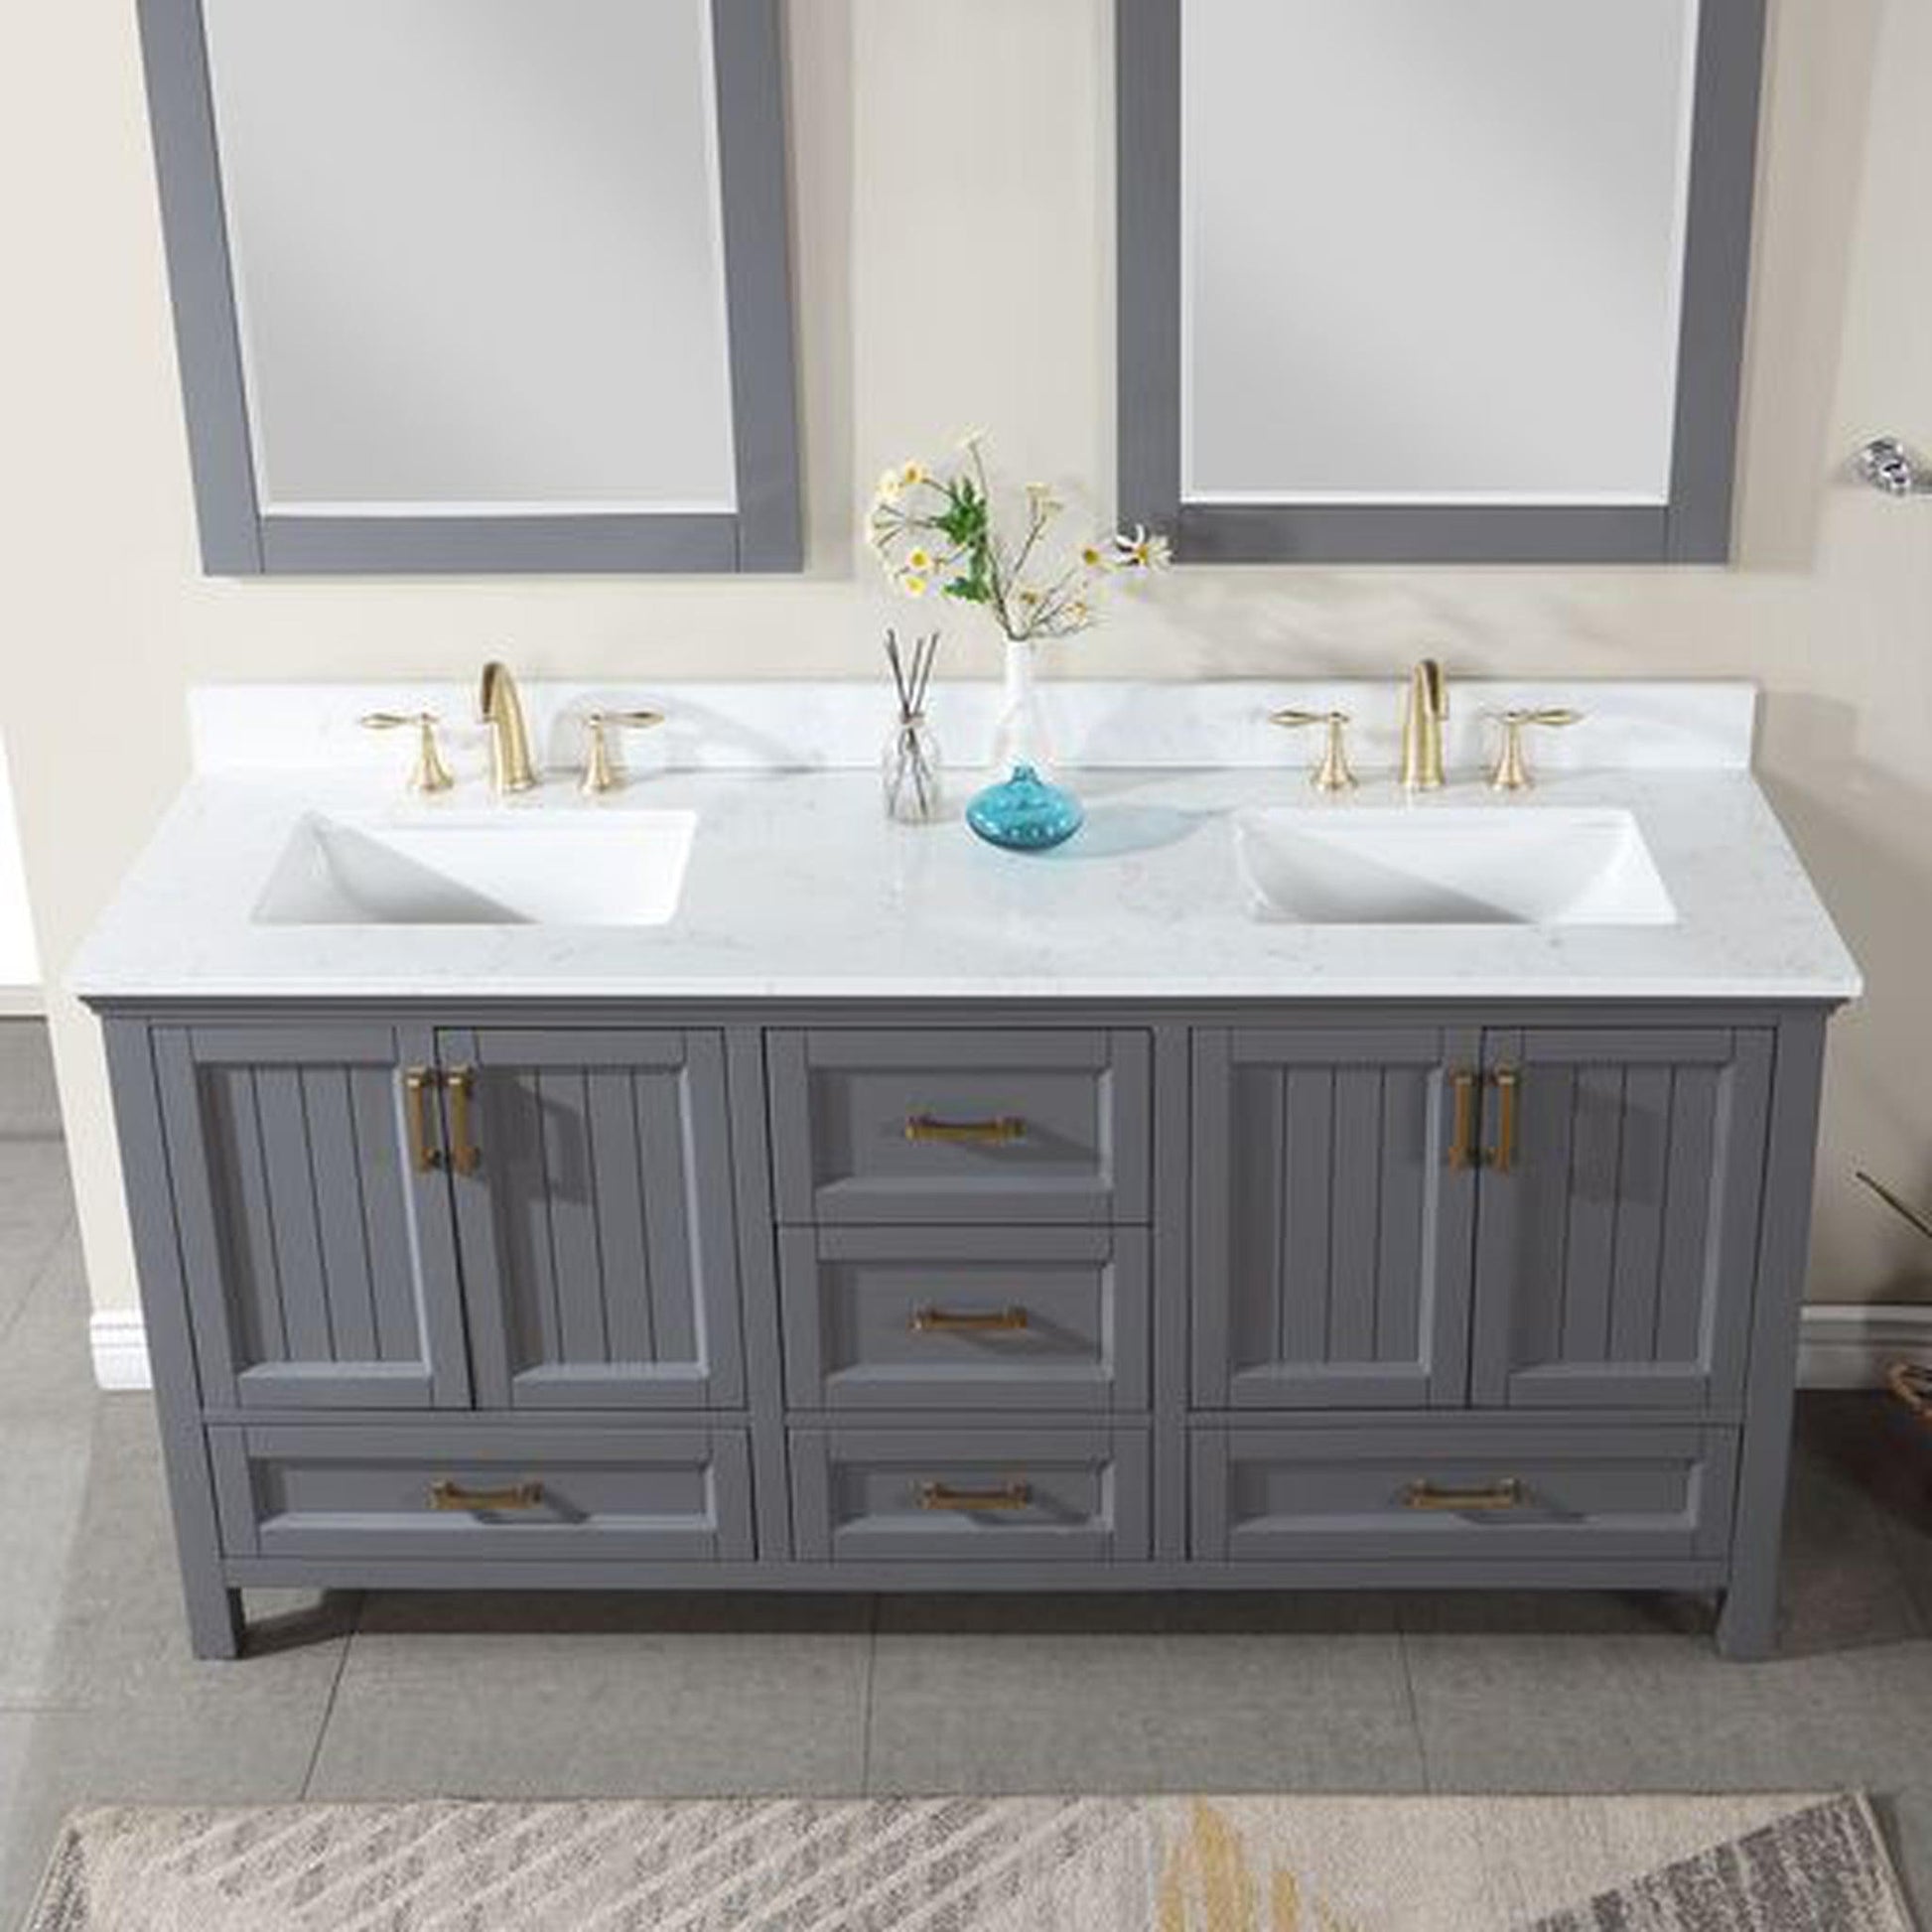 Altair Isla 72" Double Gray Freestanding Bathroom Vanity Set With Mirror, Aosta White Composite Stone Top, Two Rectangular Undermount Ceramic Sinks, and Overflow